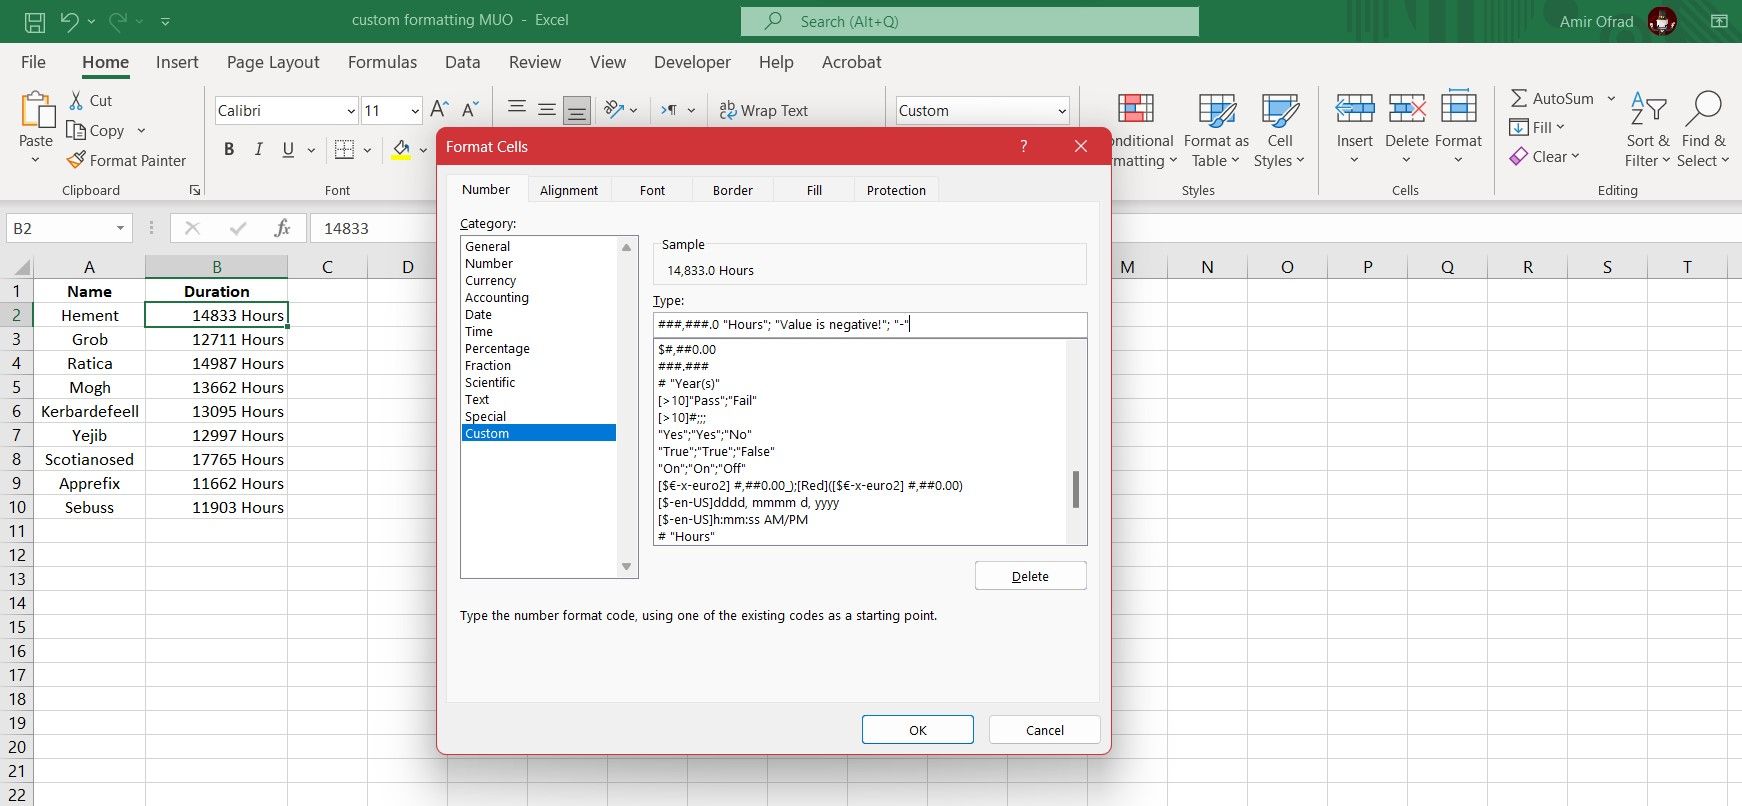 Formatting window in Excel